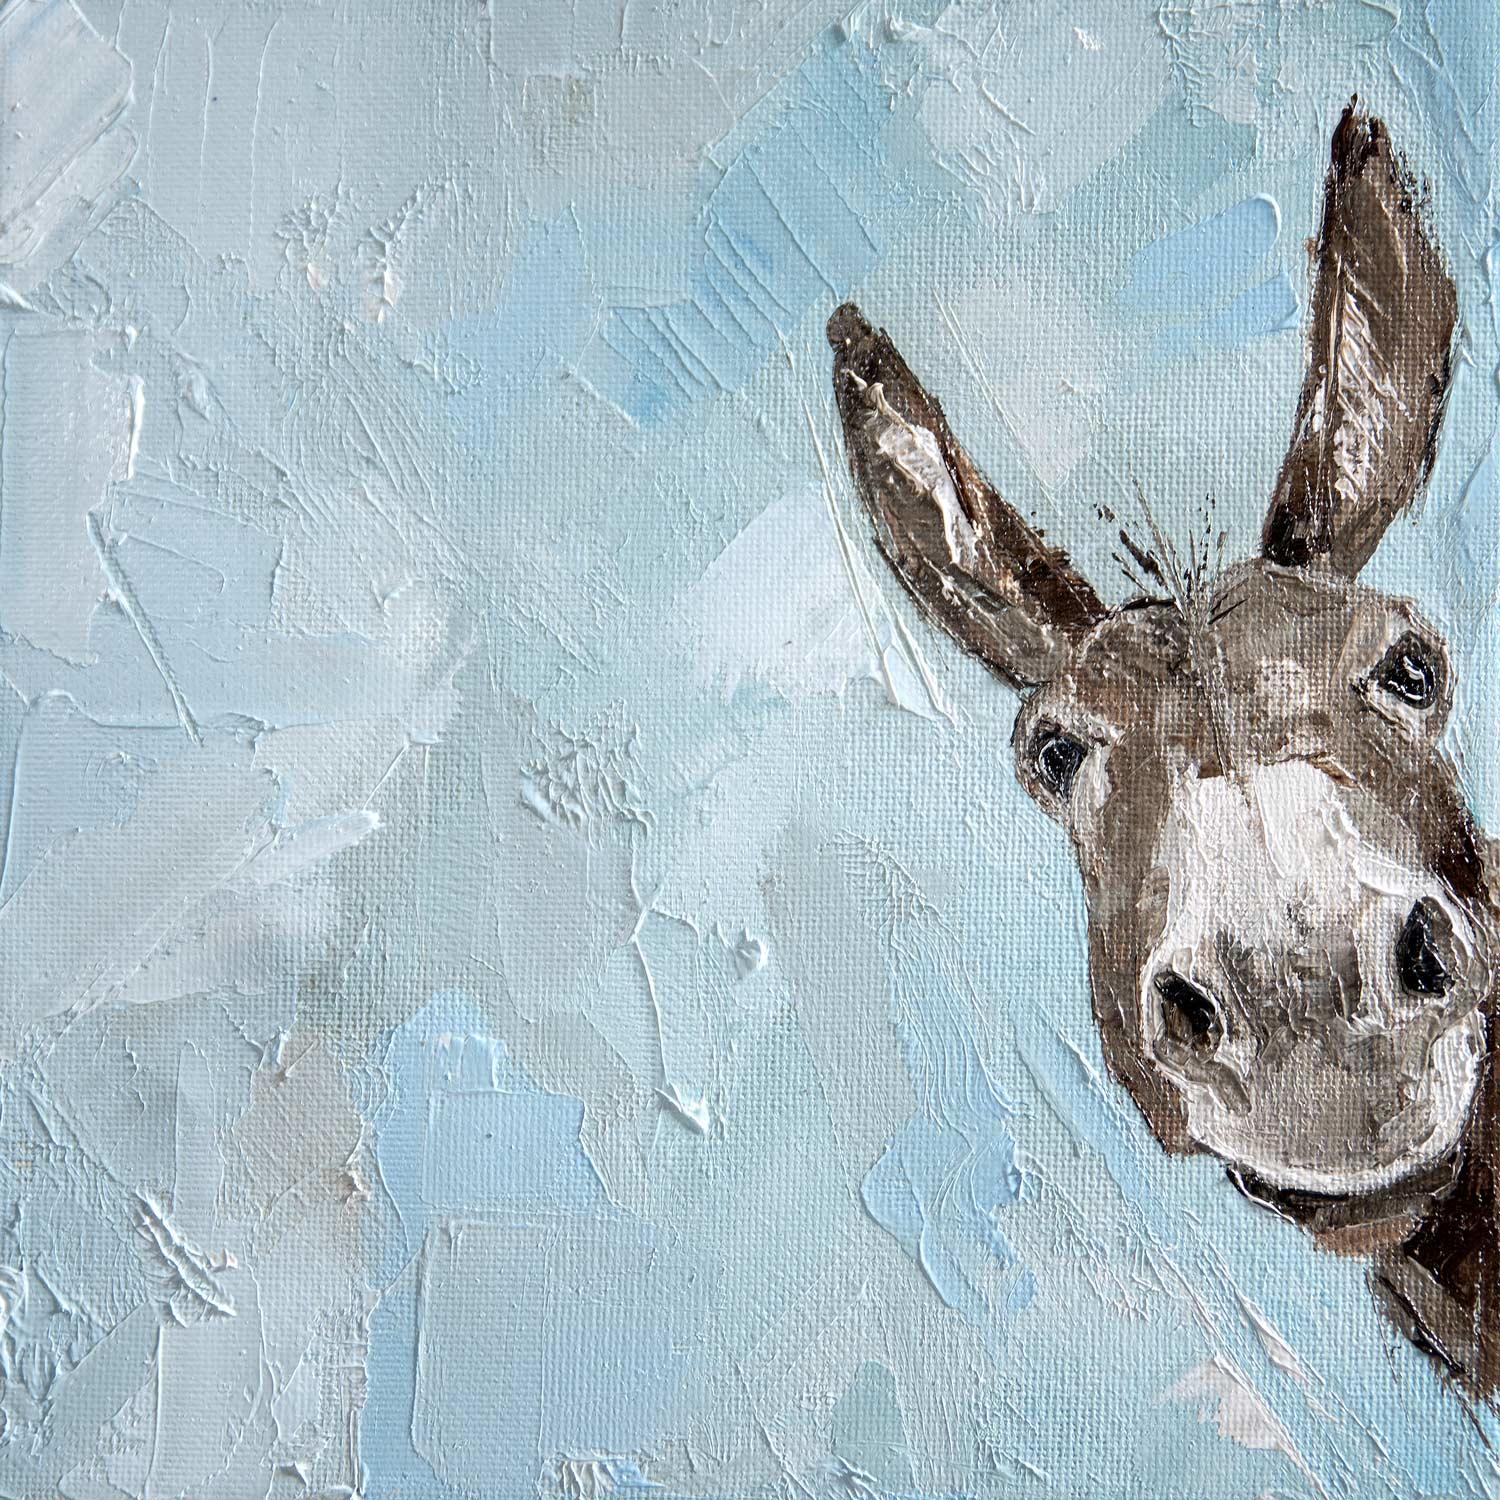 Curious Donkey by artist Charlotte Strawbridge